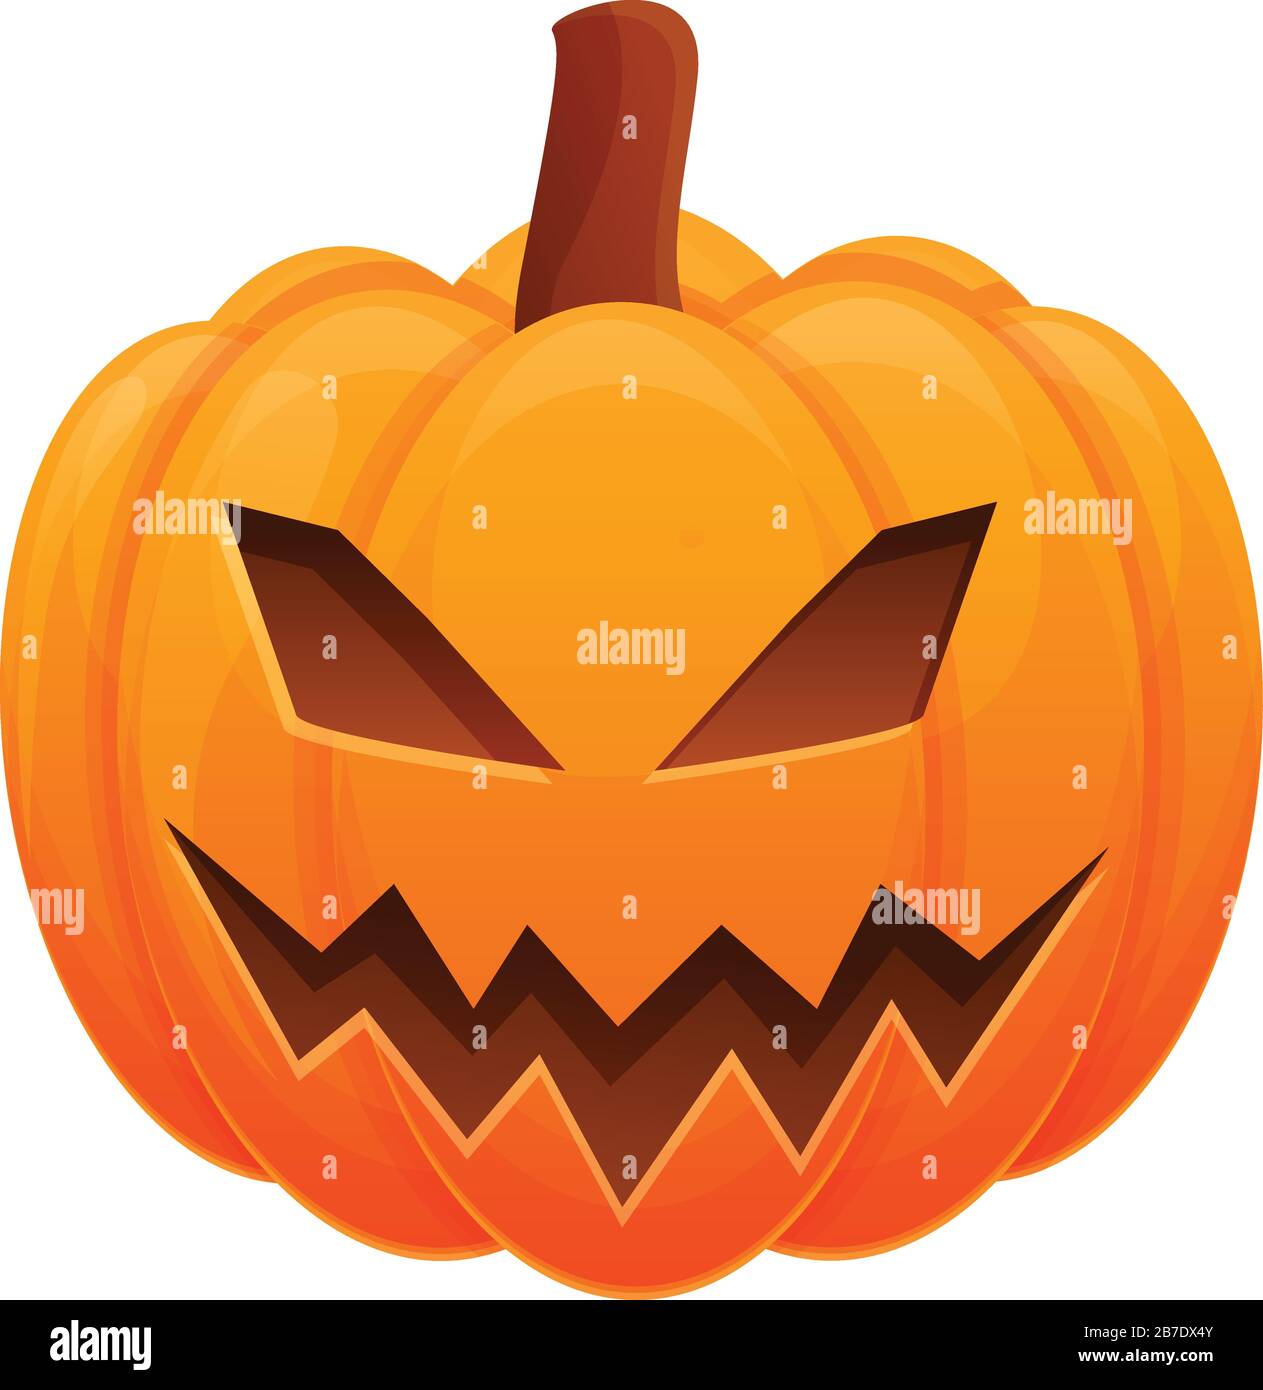 Halloween Cartoon Meme Pumpkin Scary Face Stock Vector (Royalty